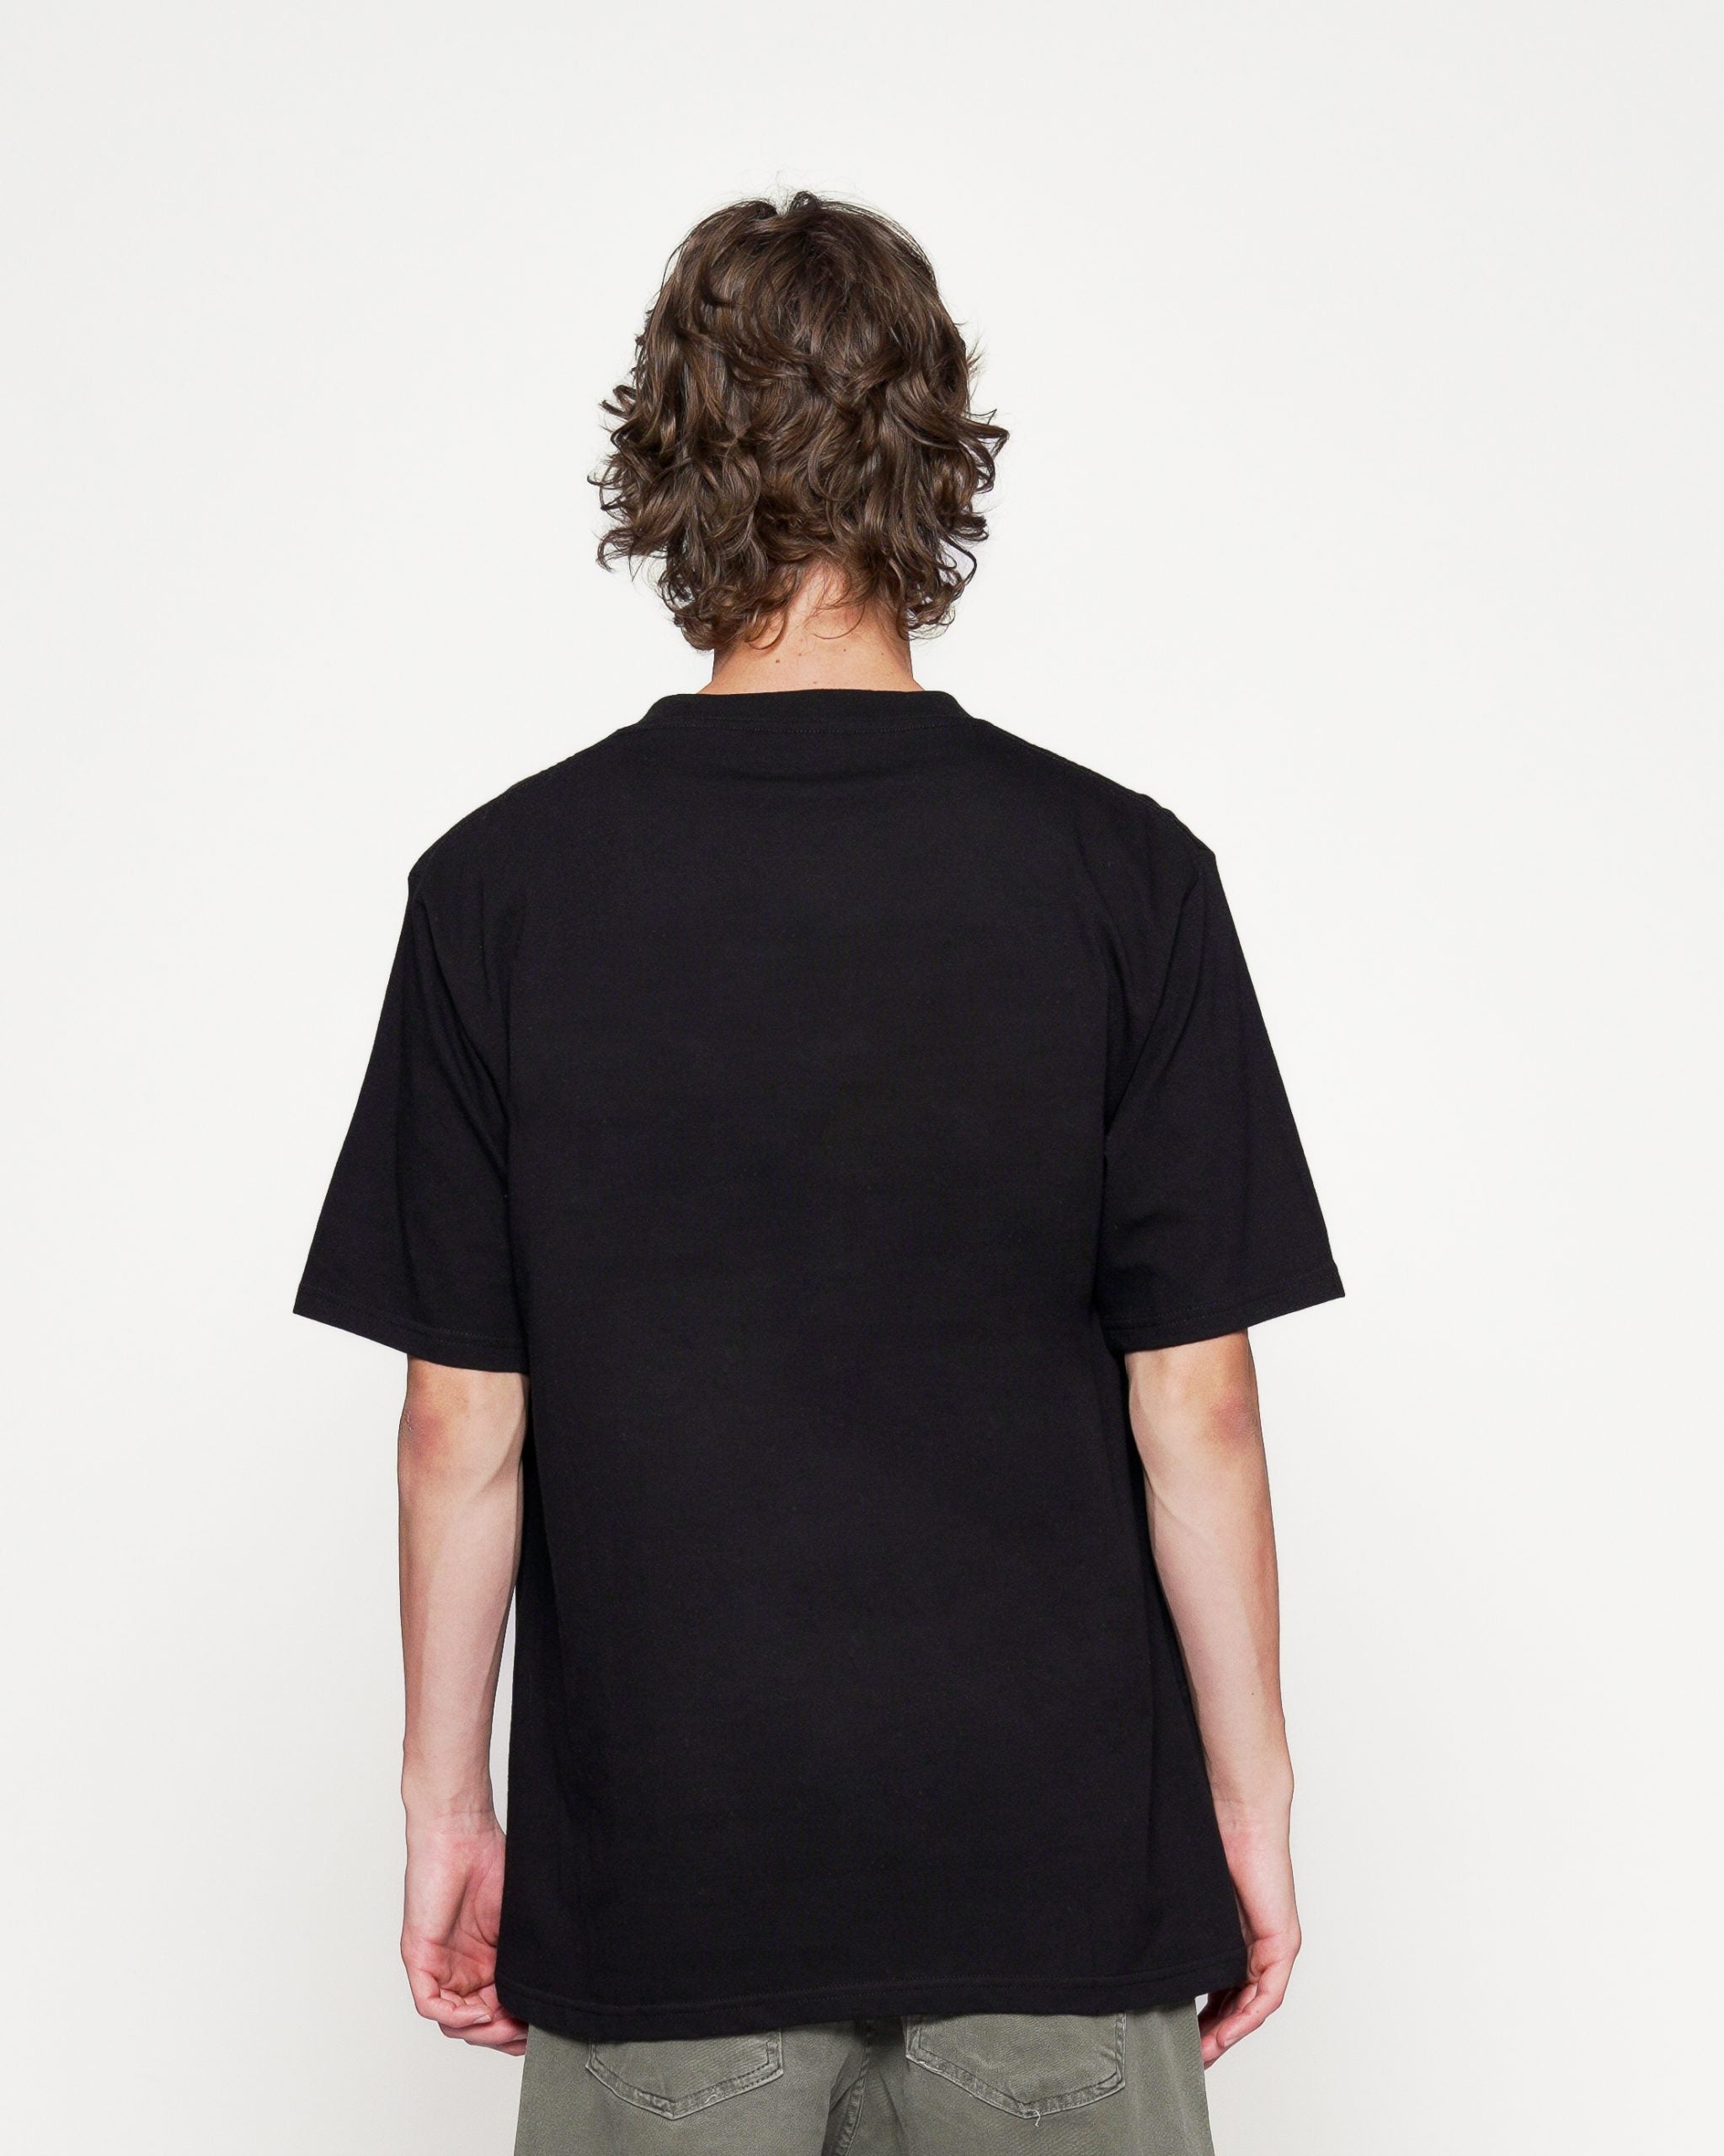 Erigo T-Shirt Oversize | Evos Roar Legend Black Unisex Voucher Diamond